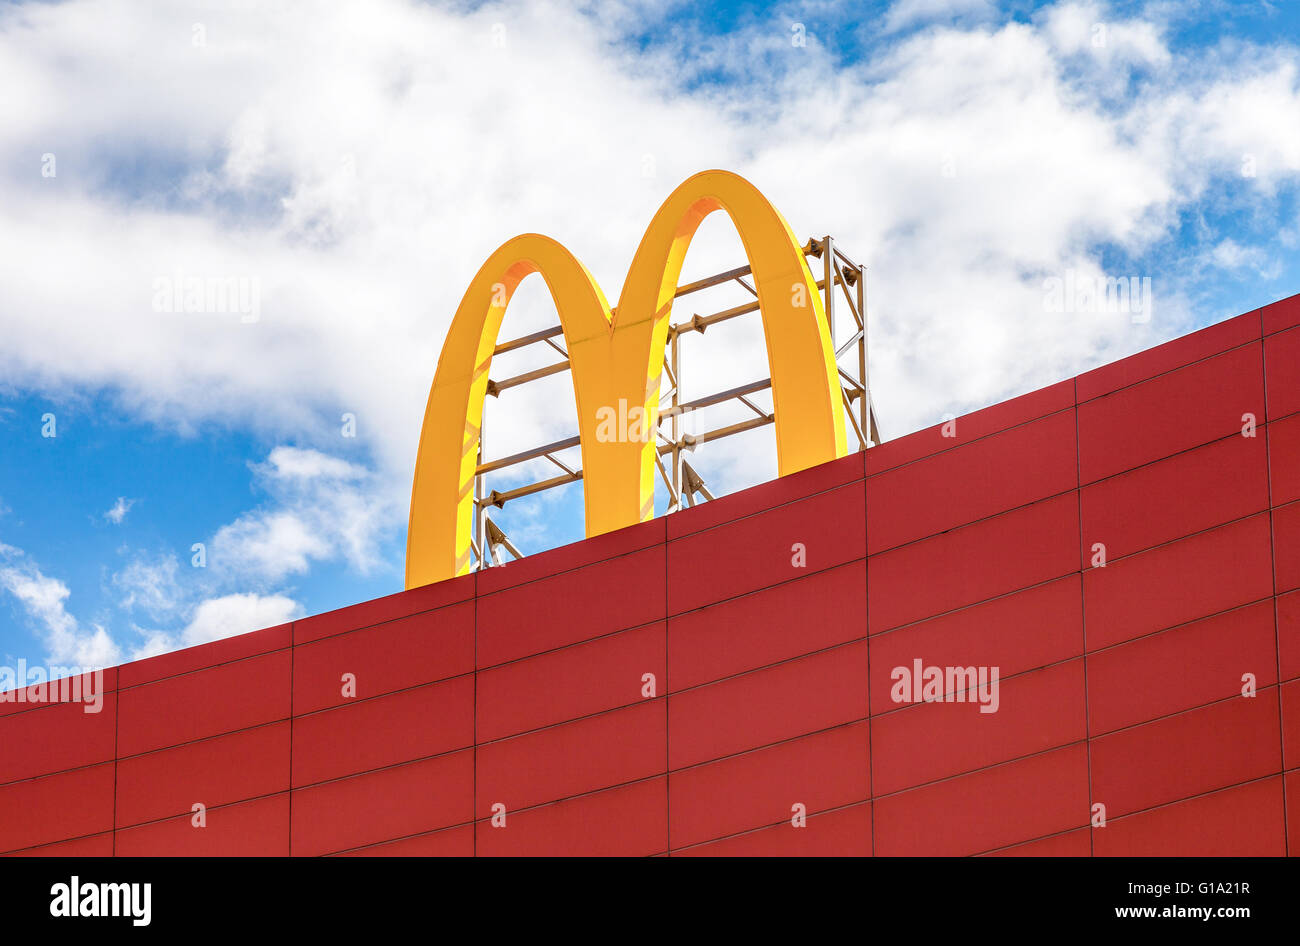 McDonald's logo against the blue sky Stock Photo